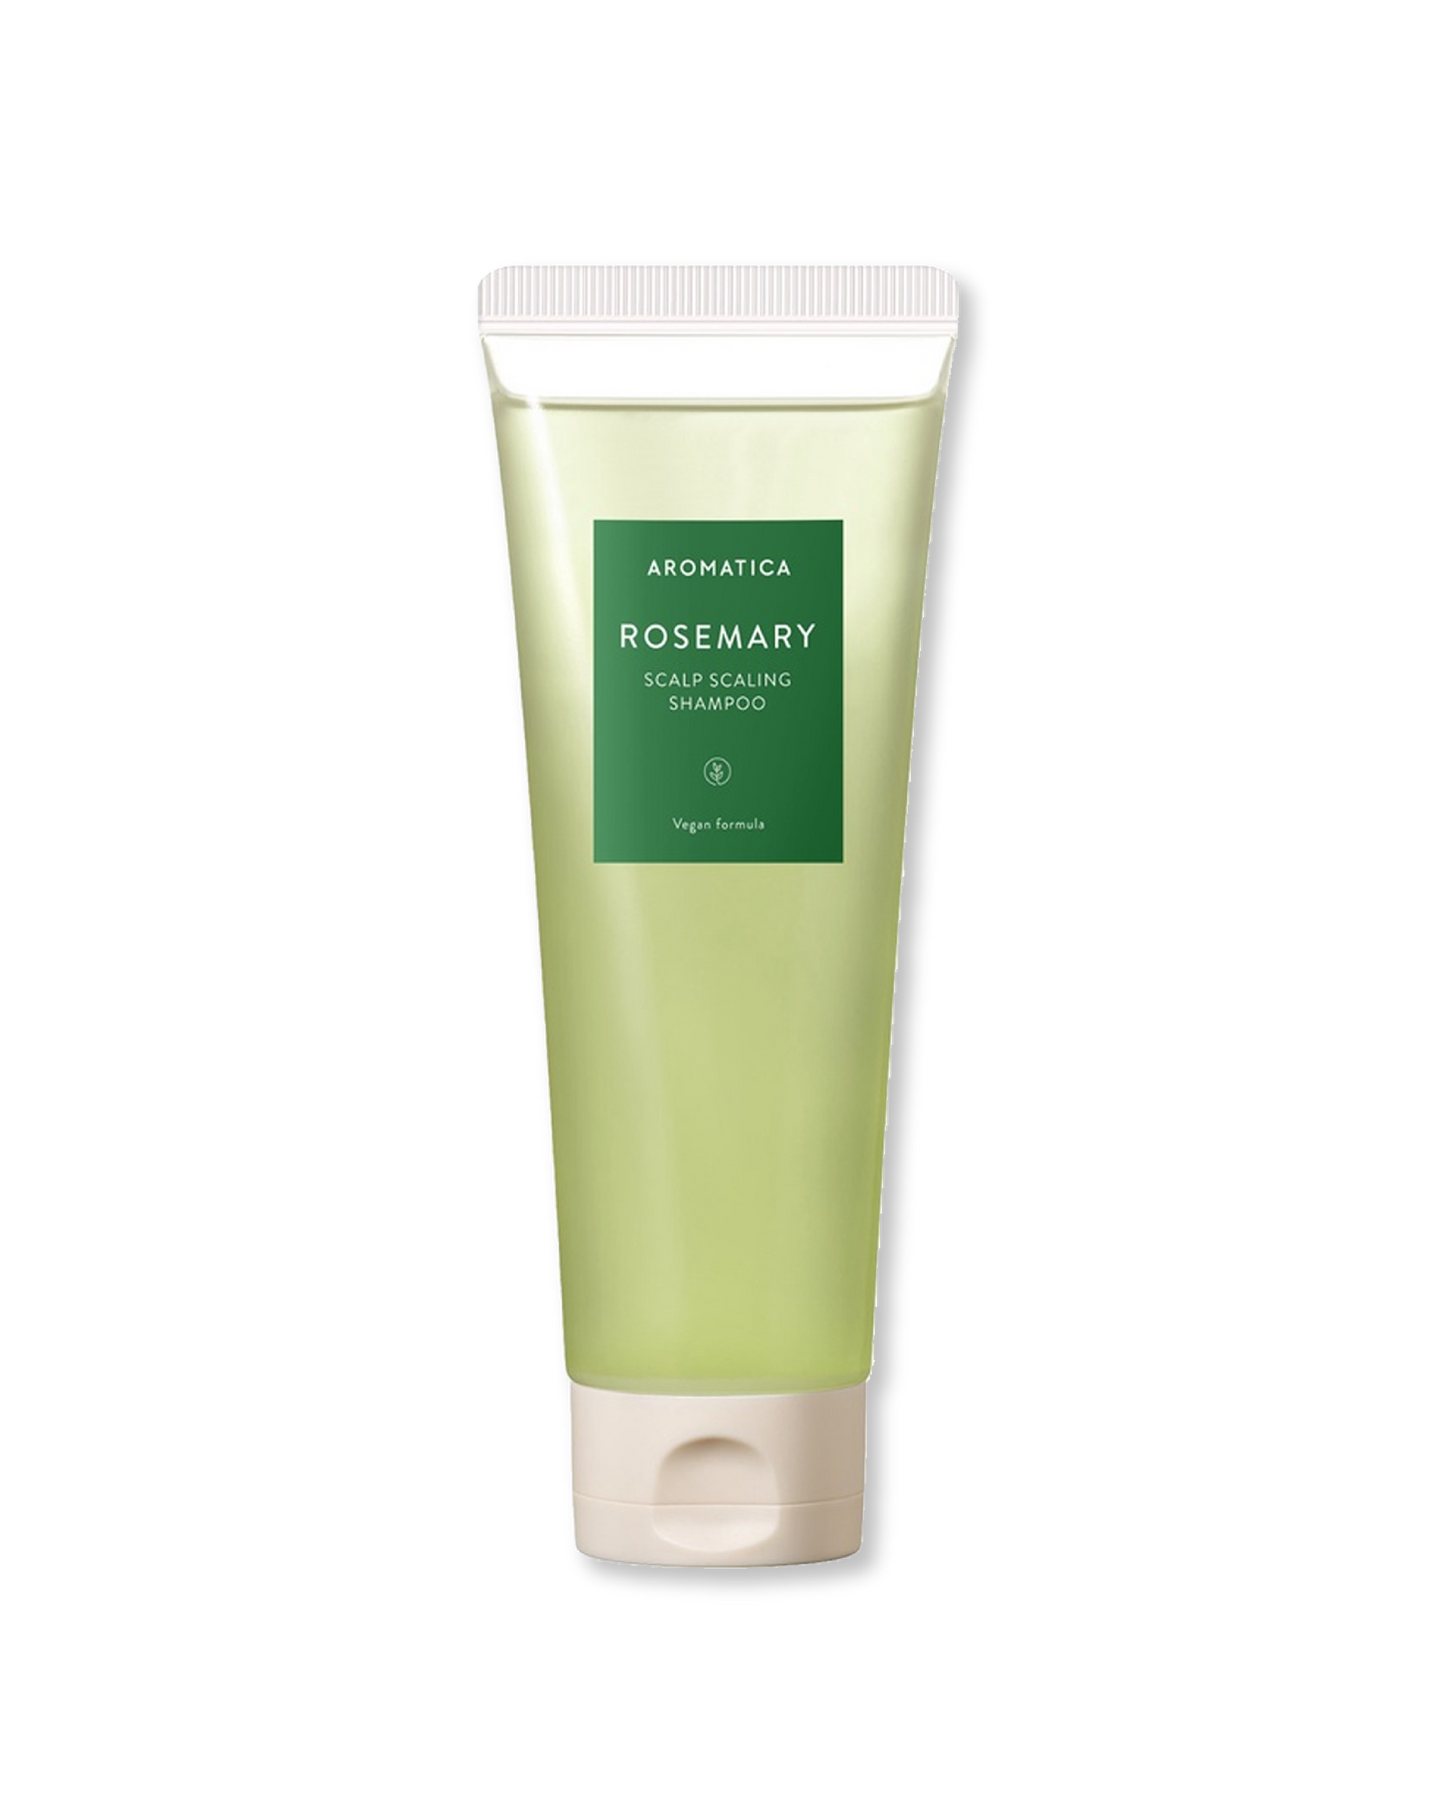 AROMATICA Rosemary Scalp Scaling Shampoo (180ml)